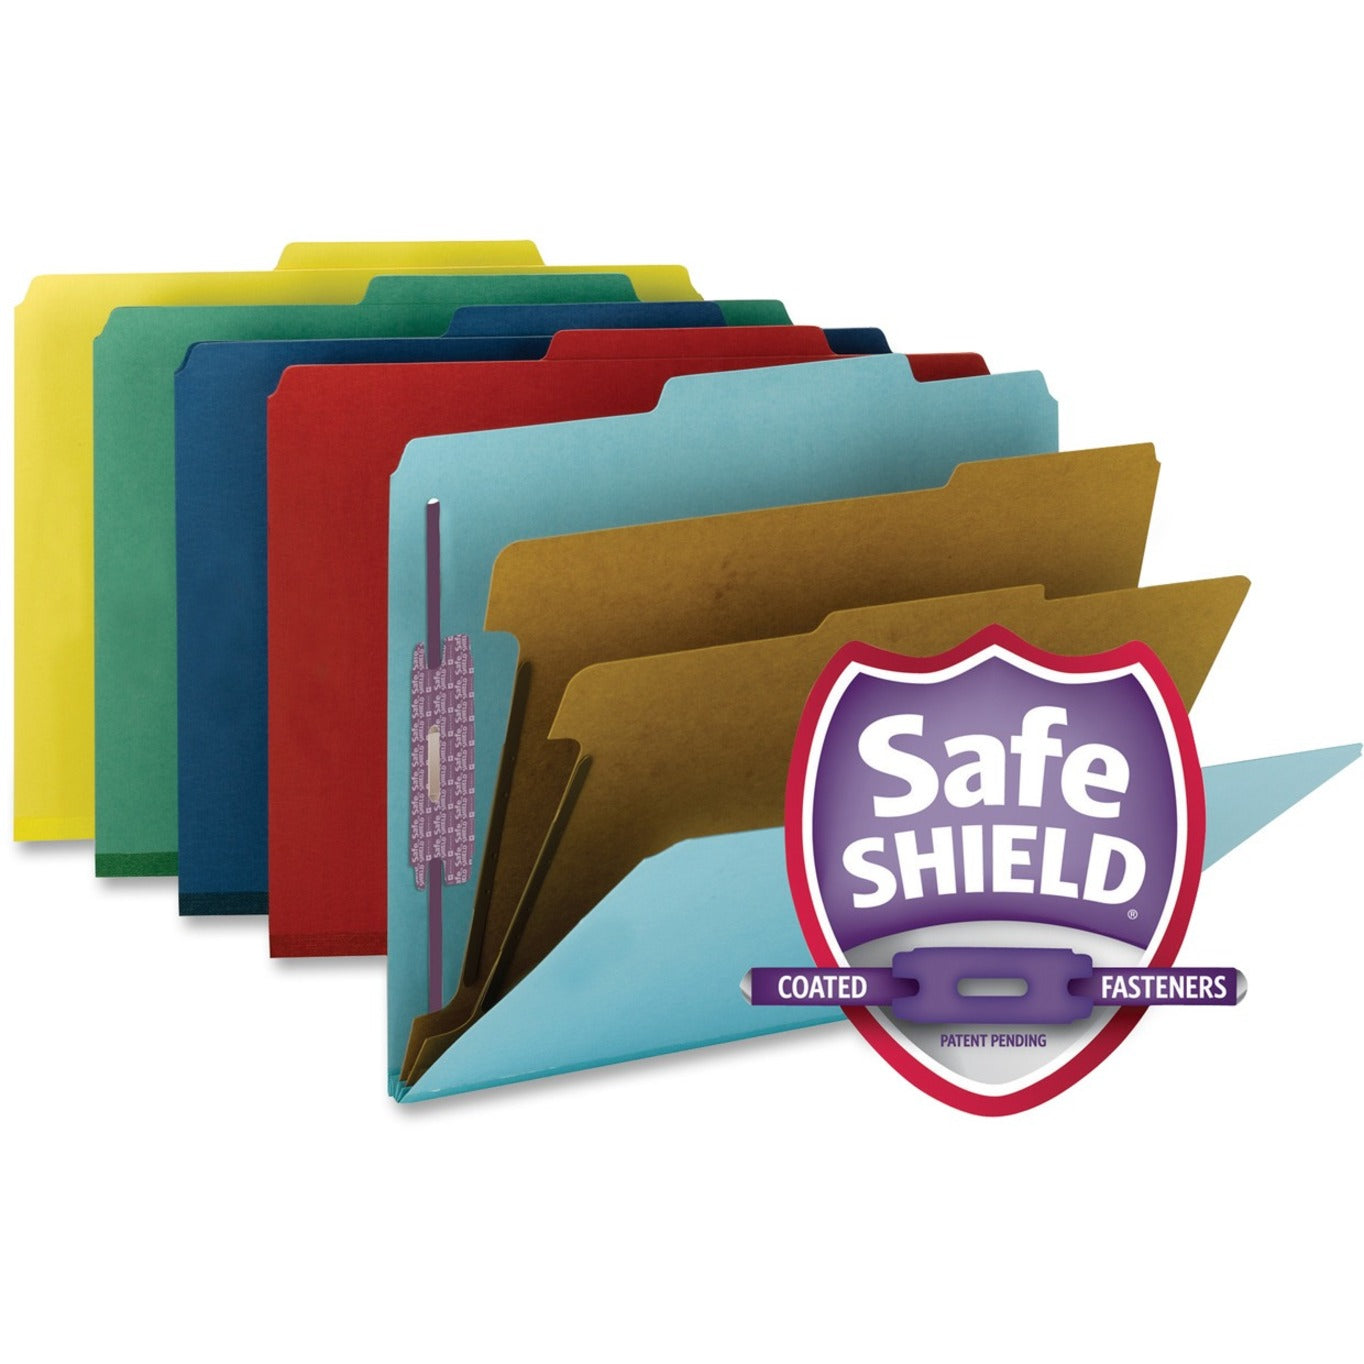 Smead Premium Pressboard Classification Folders with SafeSHIELD&reg; Coated Fastener Technology